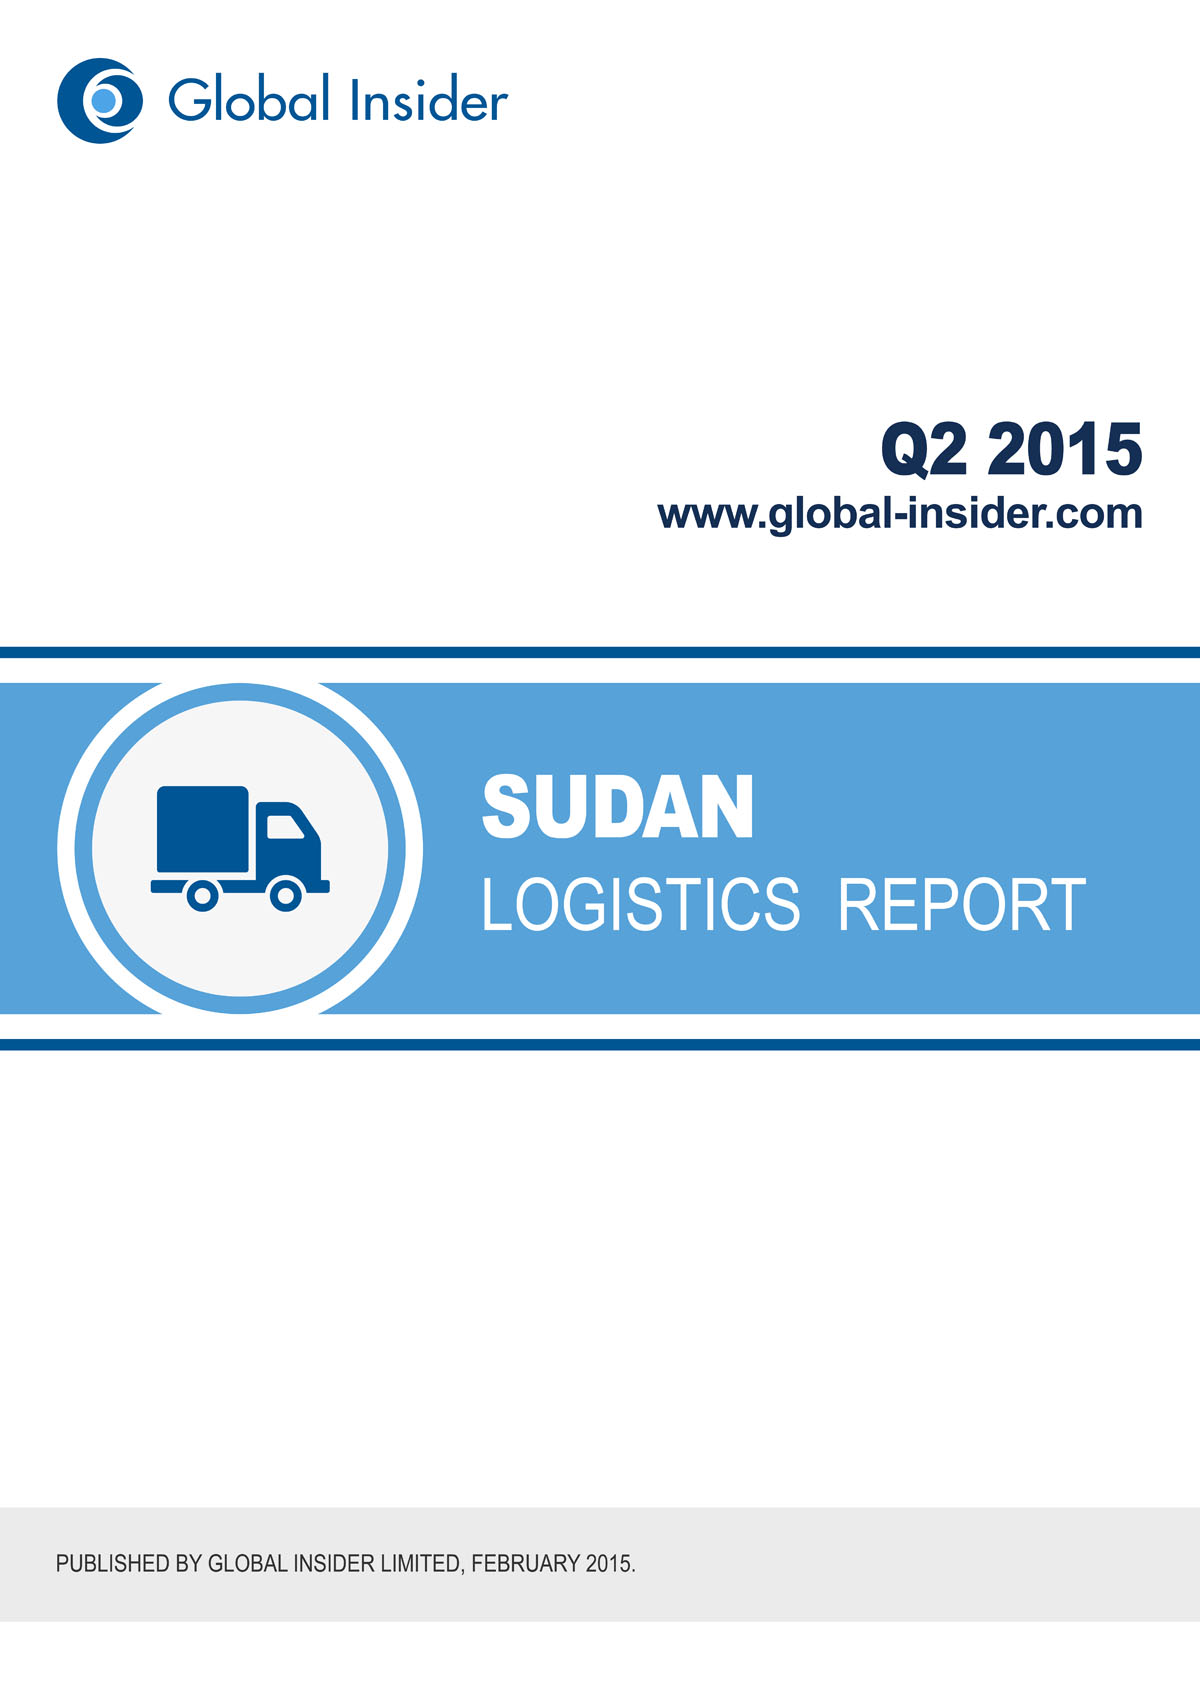 Sudan Logistics Report